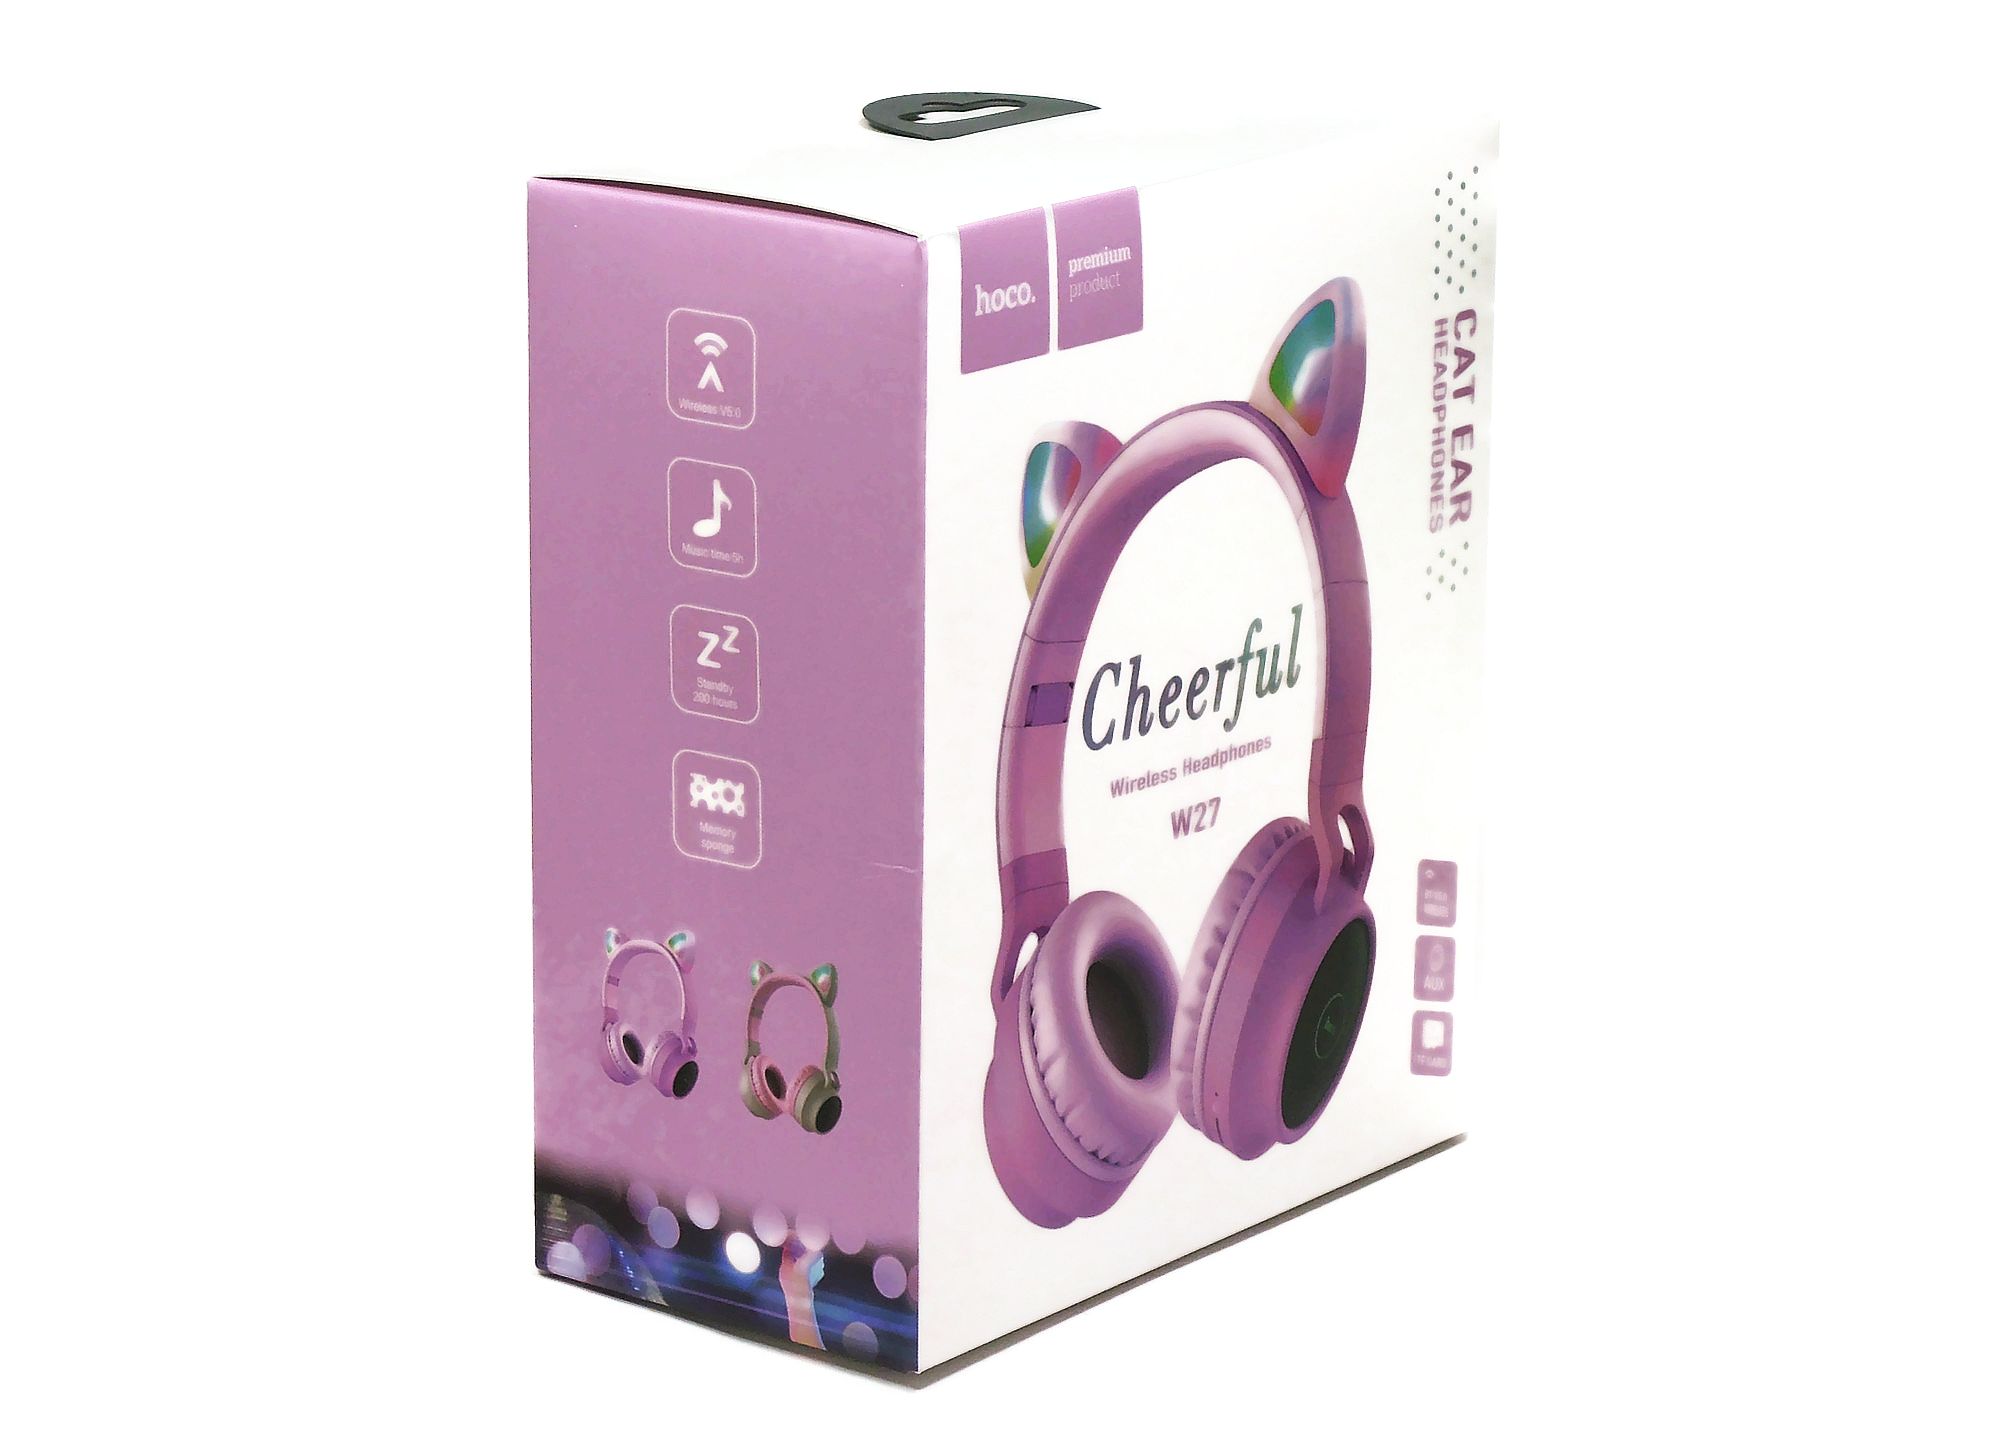 Стерео-наушники Bluetooth Hoco W27, Cat Ear (AUX, подсветка) Pink